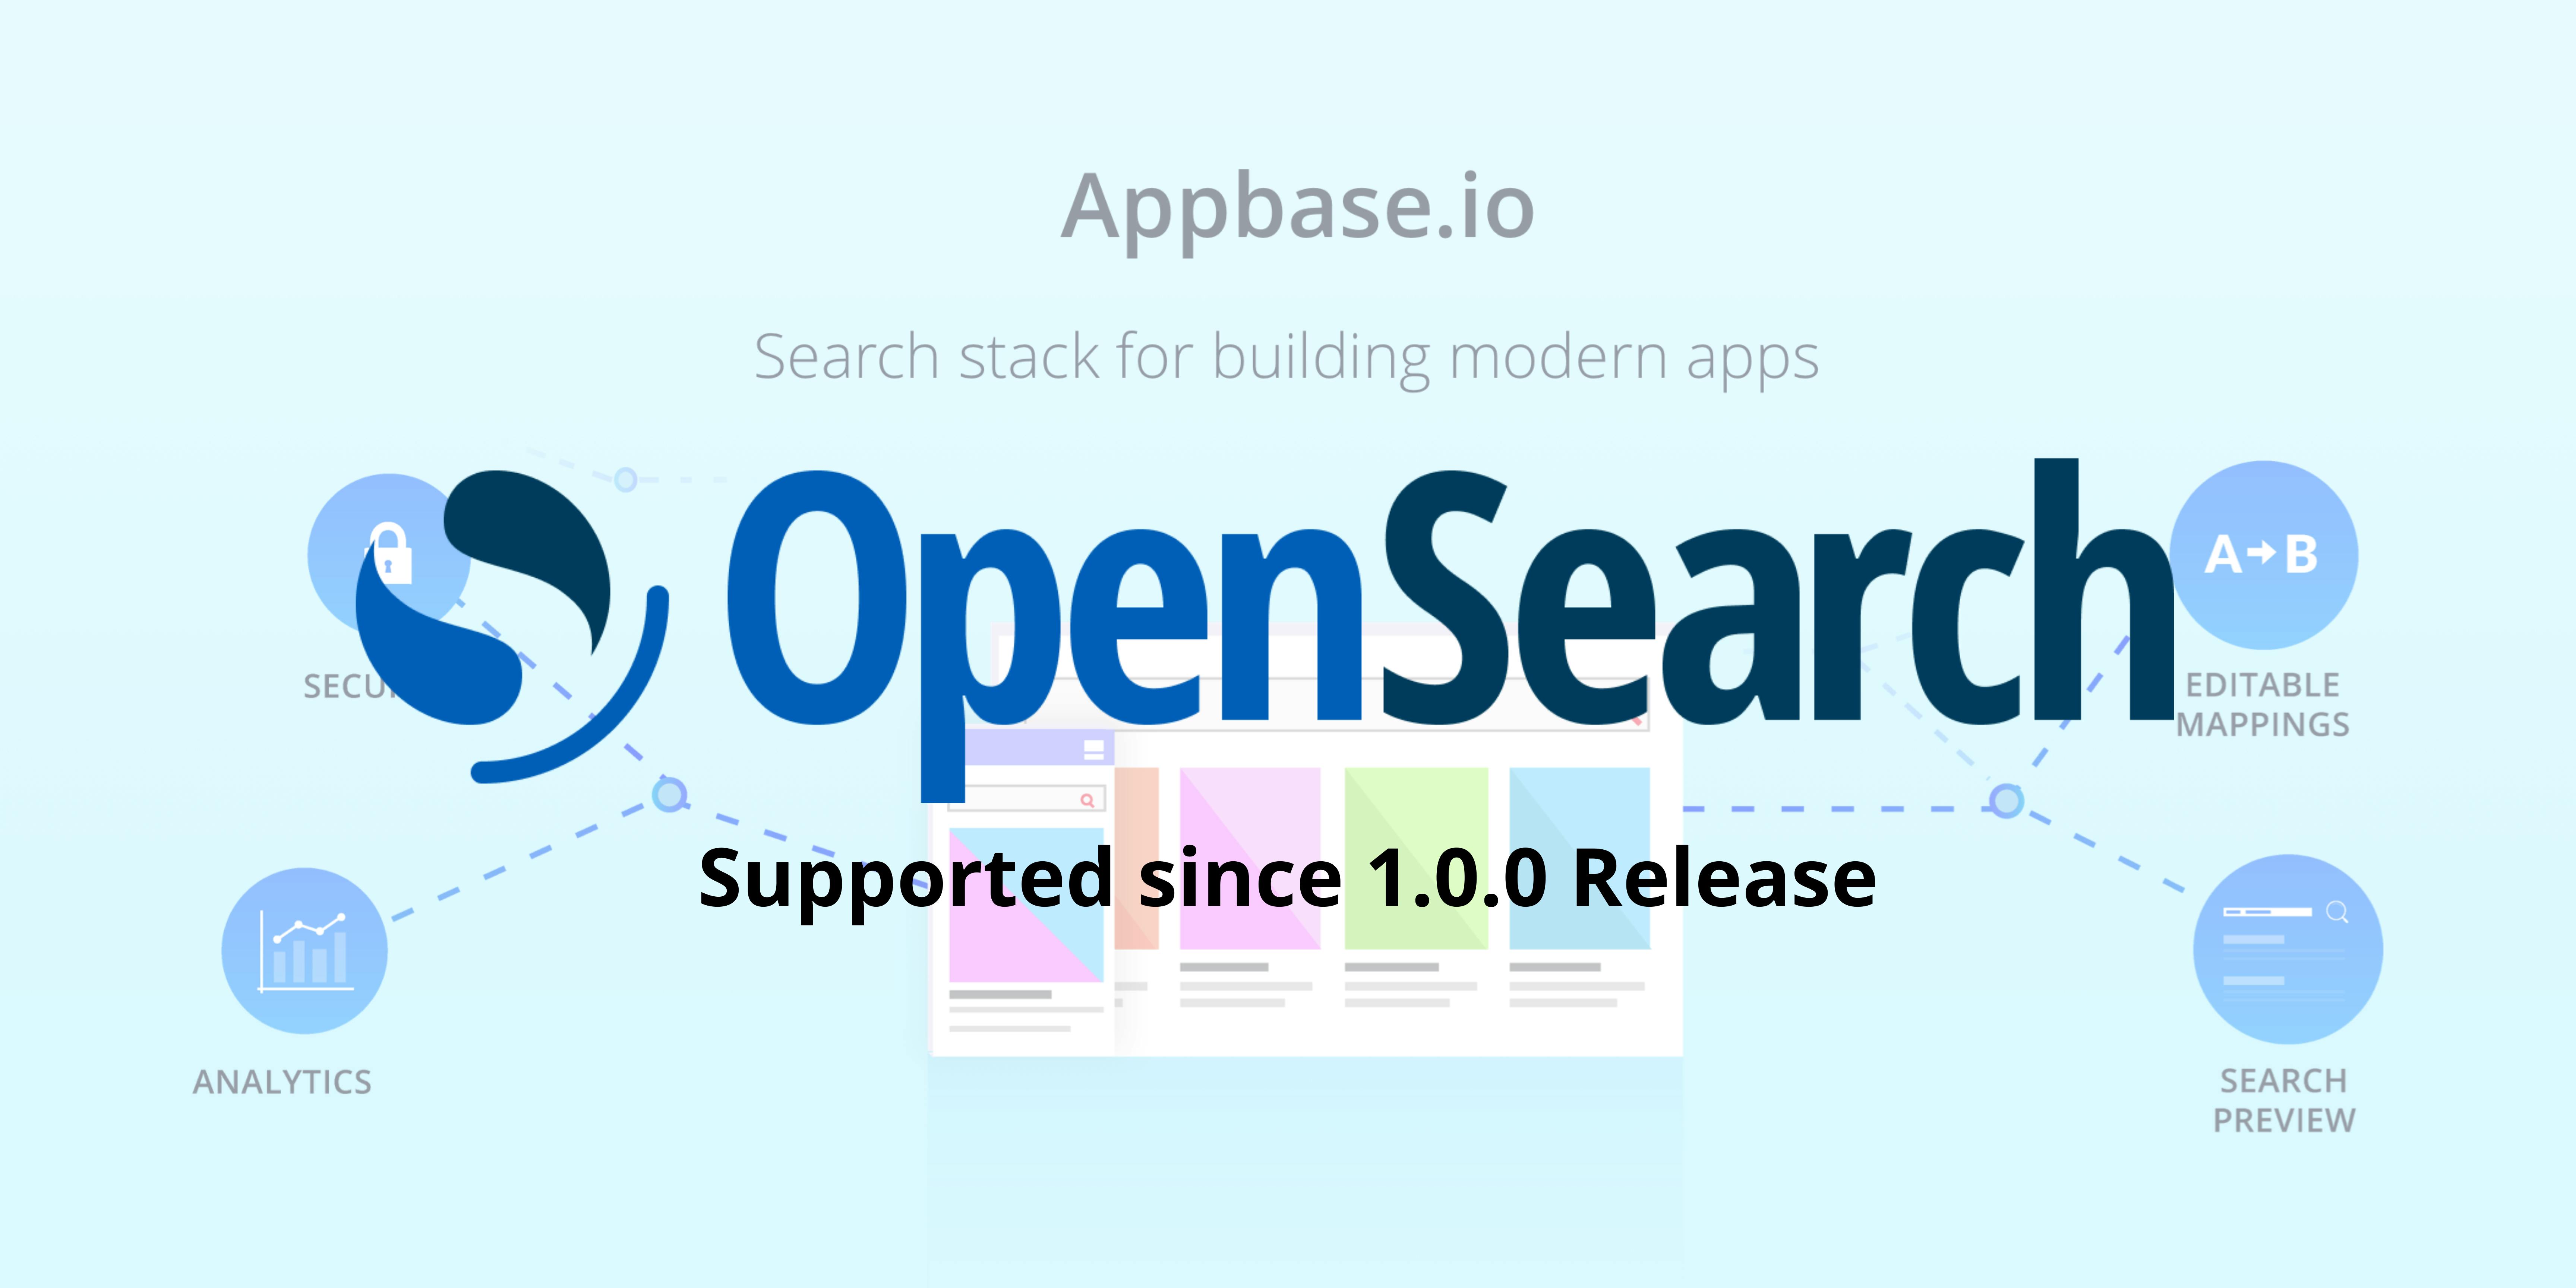 appbase.io opensearch partnership